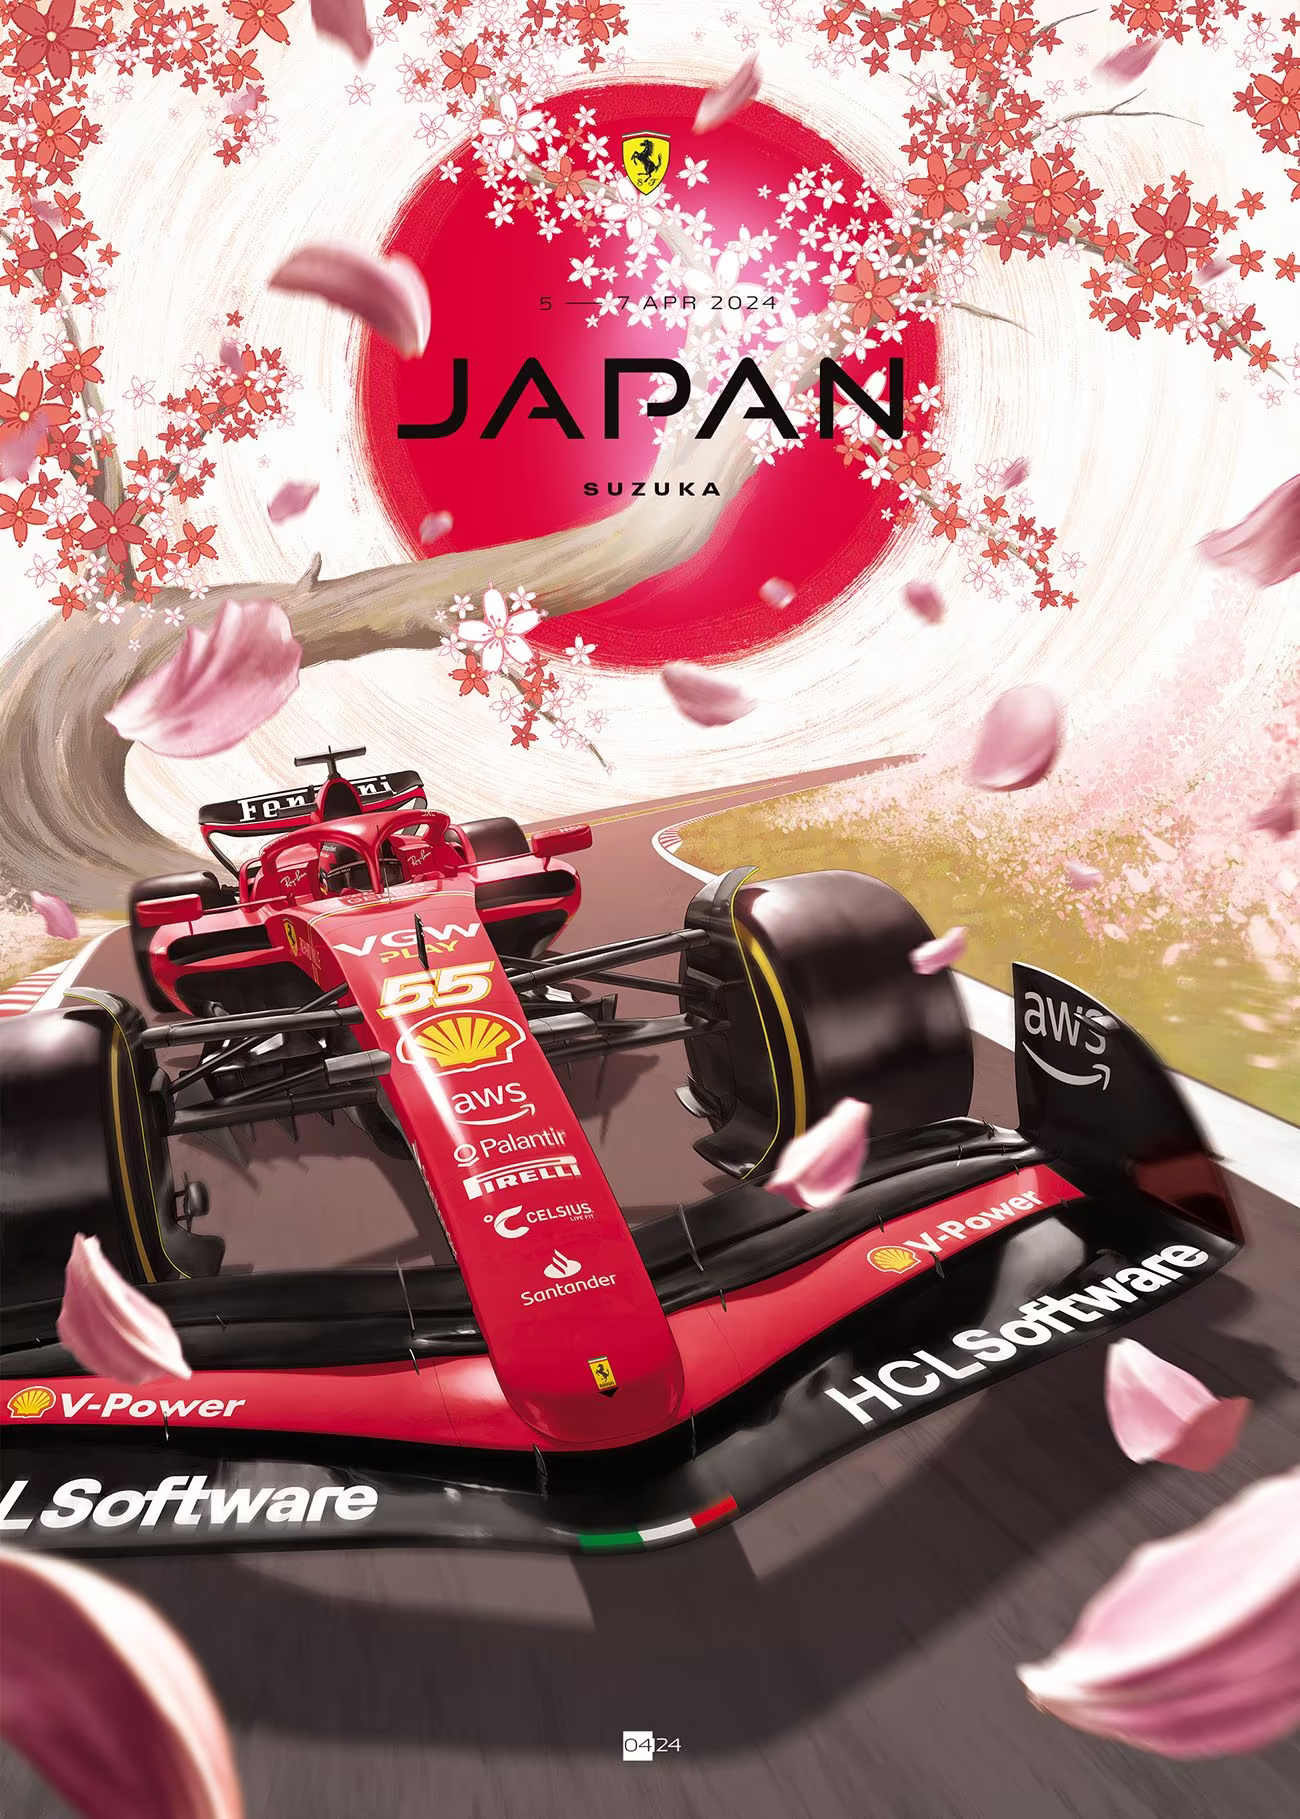 2024 Ferrari F1 RACE 4 Japan grand prix race cover art poster